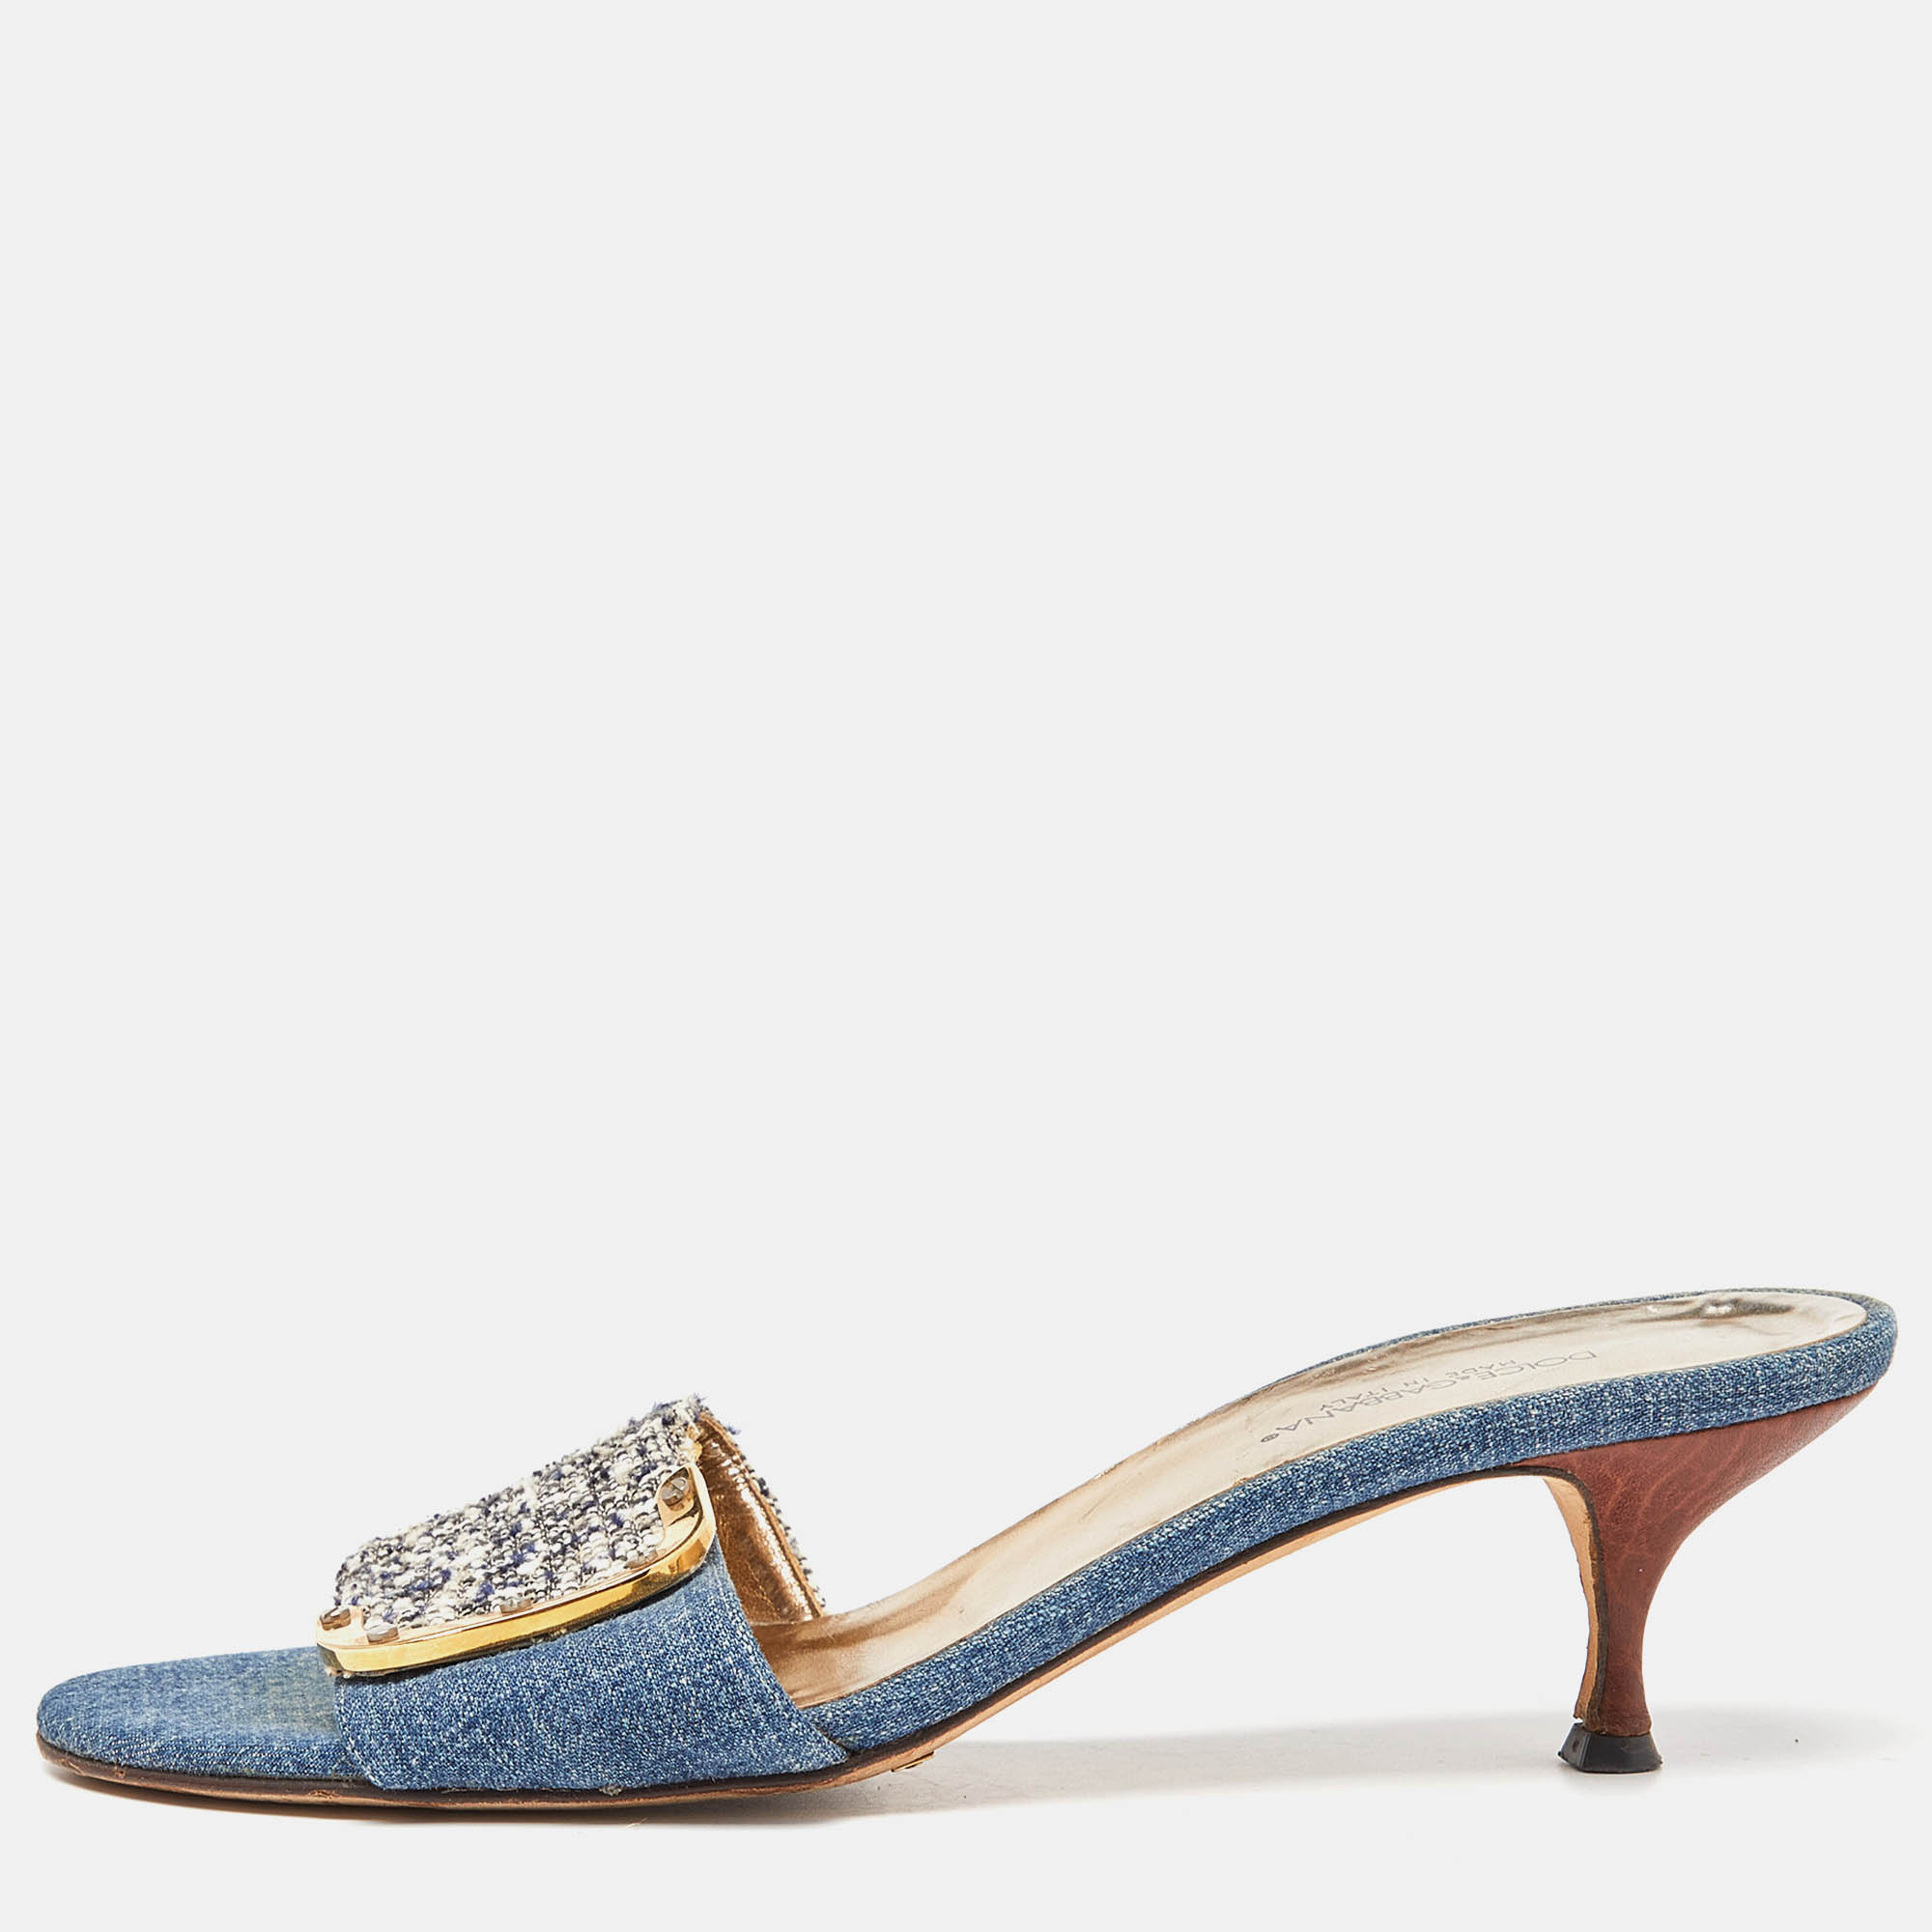 Dolce & gabbana blue/white tweed and denim slide sandals size 38.5